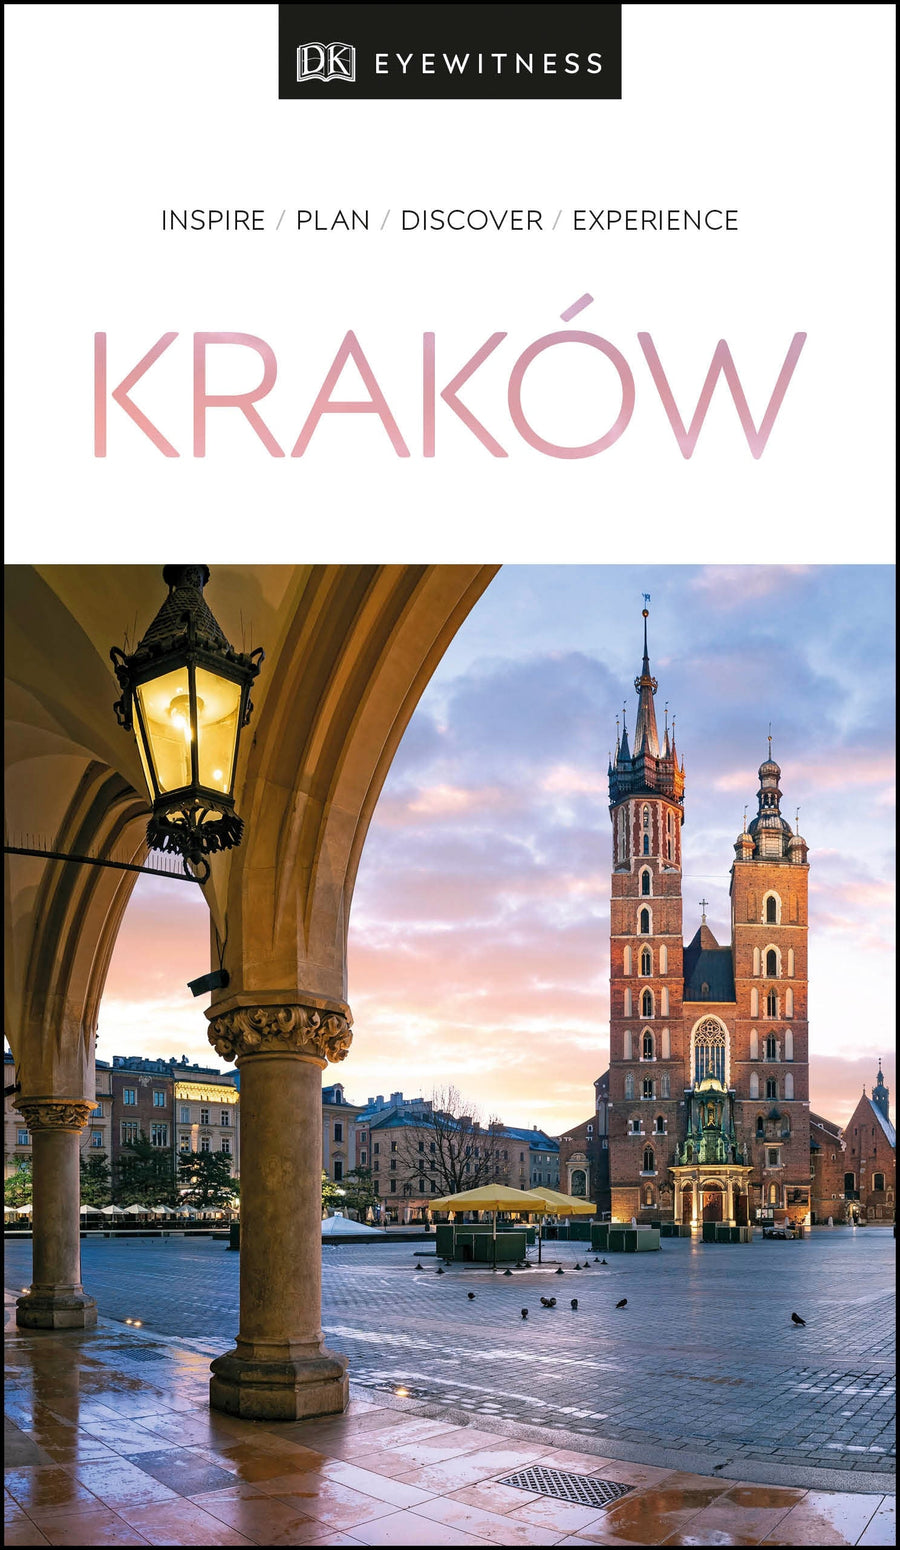 Guide de voyage (en anglais) - Cracow | Eyewitness guide de voyage Eyewitness 